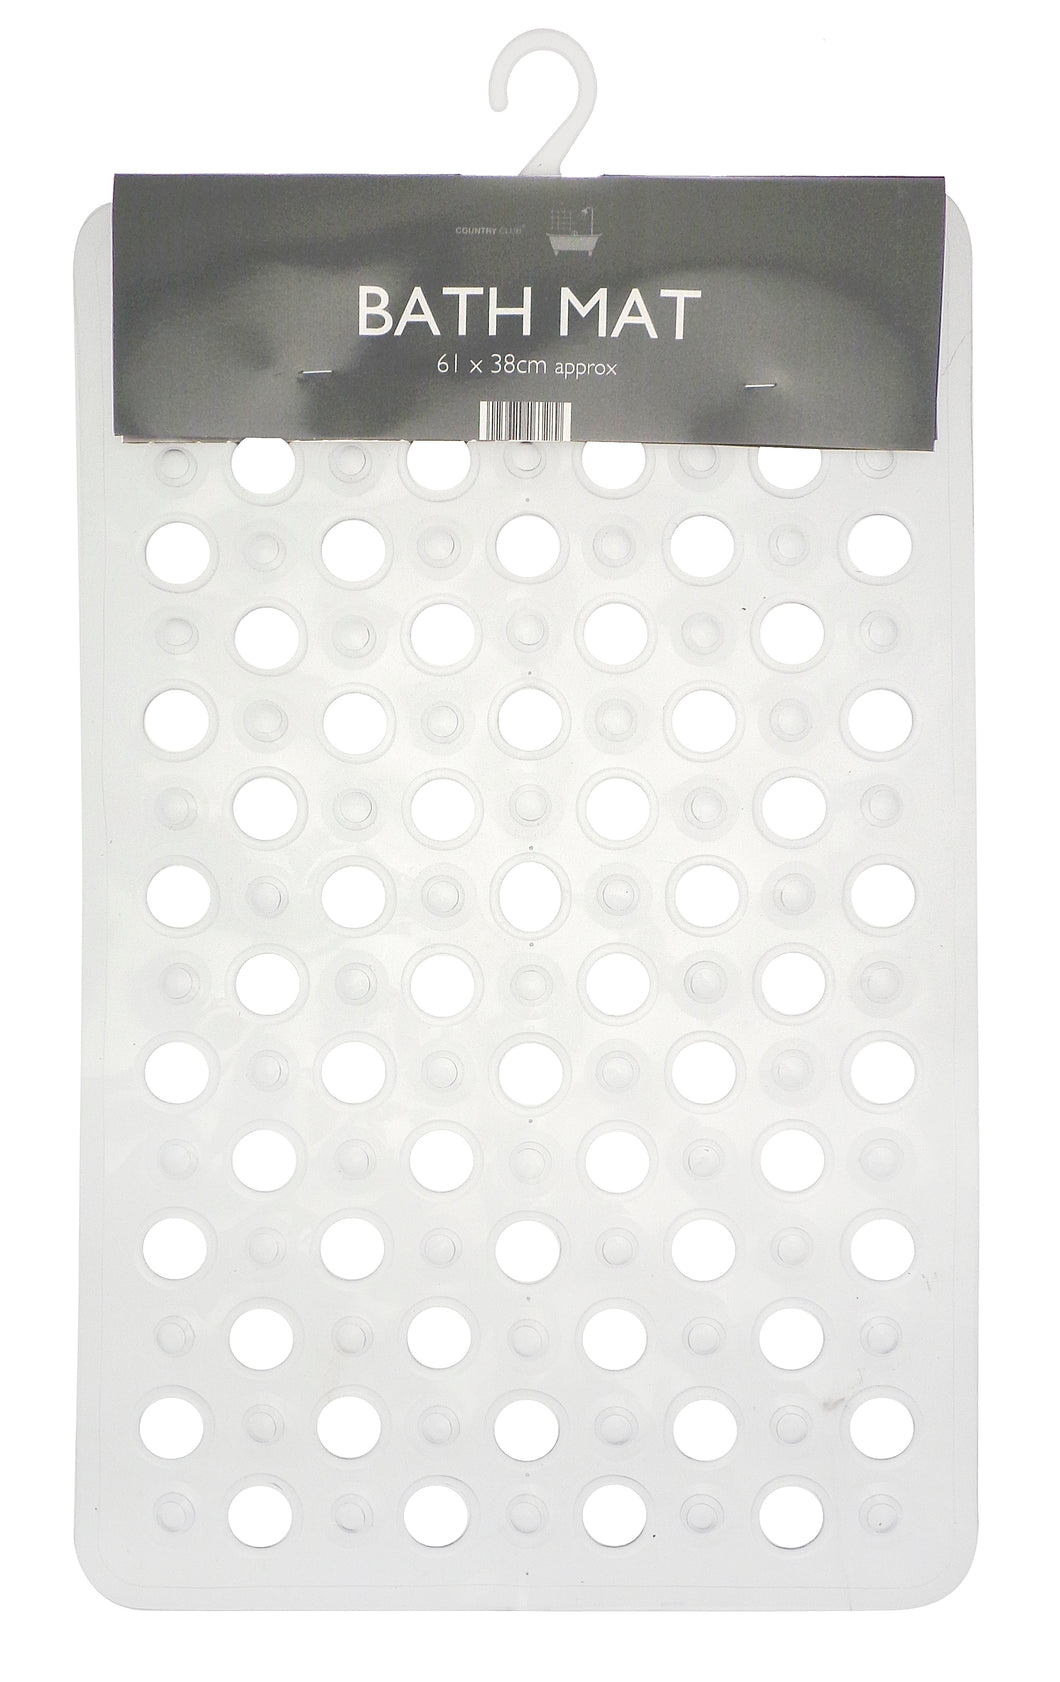 Bath Shower Mat Non-Slip PVC Bathroom Rubber Mats Anti Slip Suction 61 cm x 38 cm